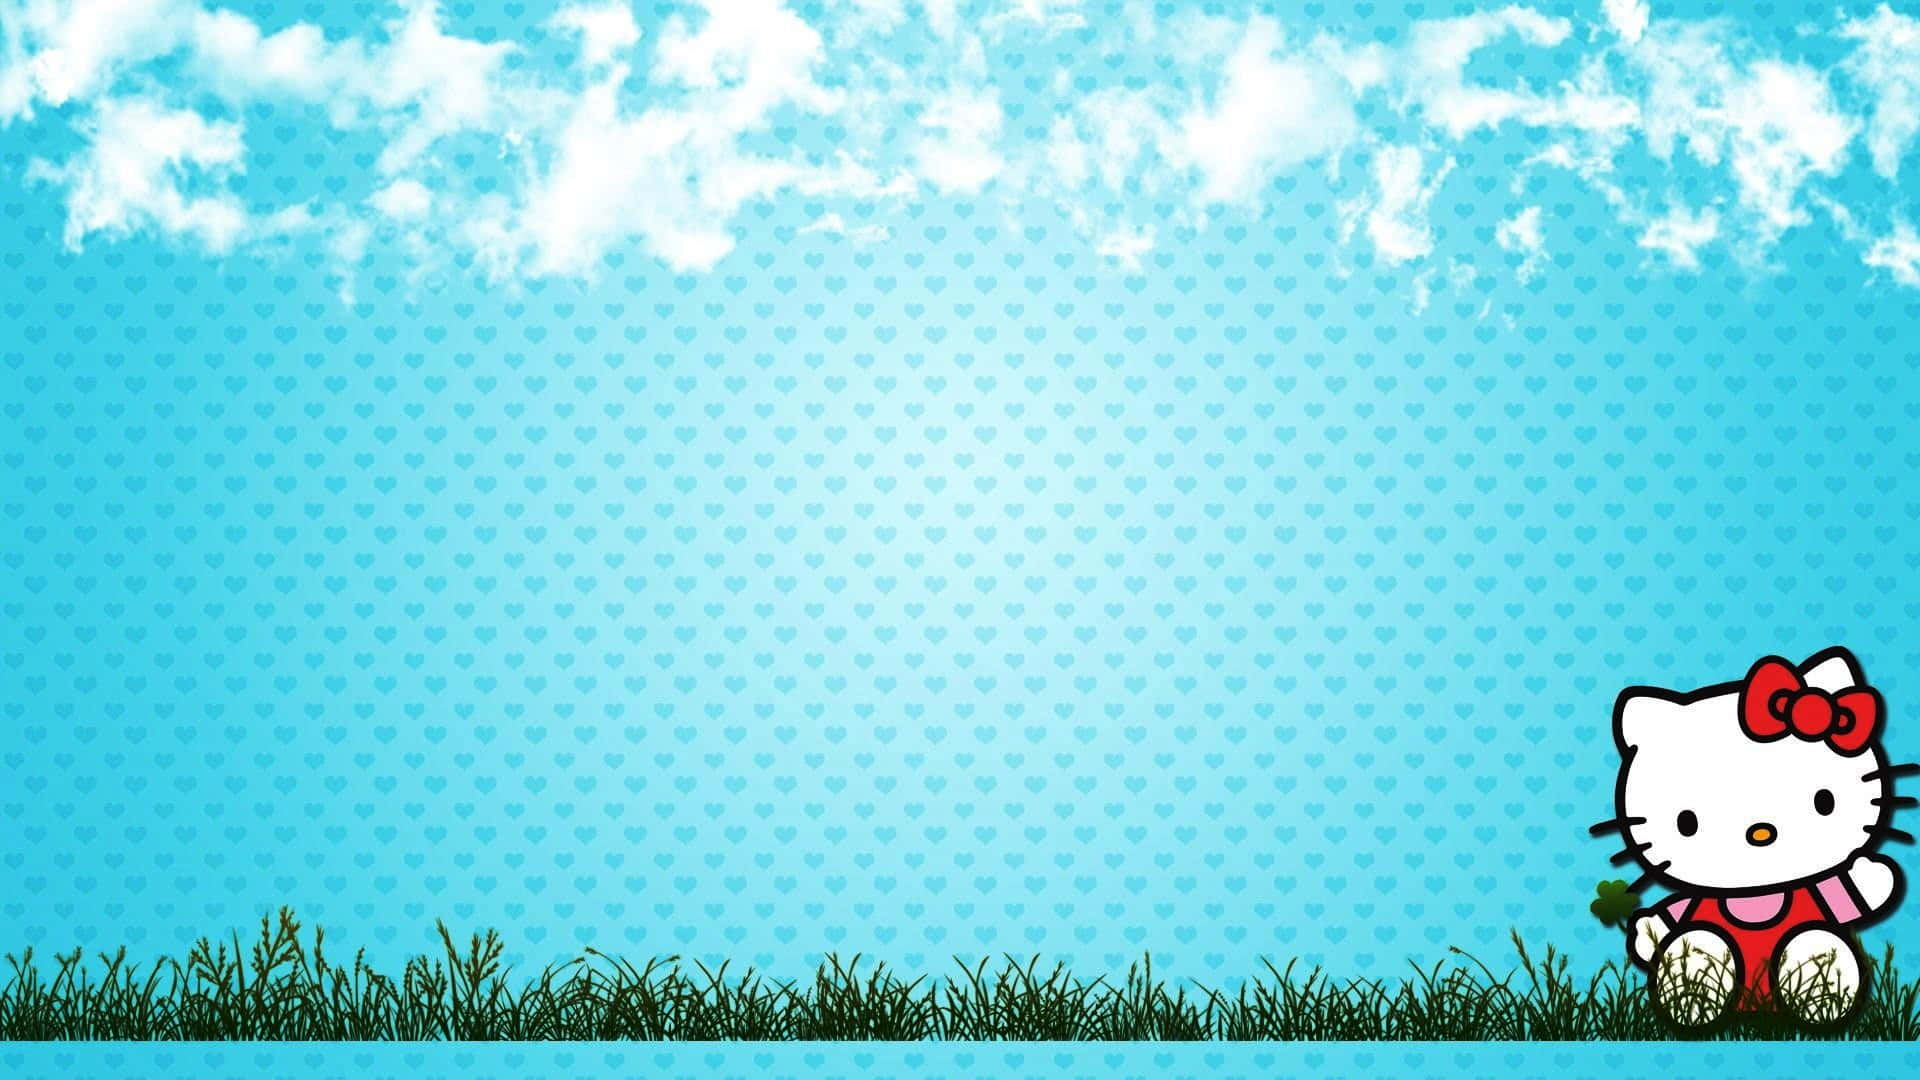 Hello Kitty On Grass Digital Art Background